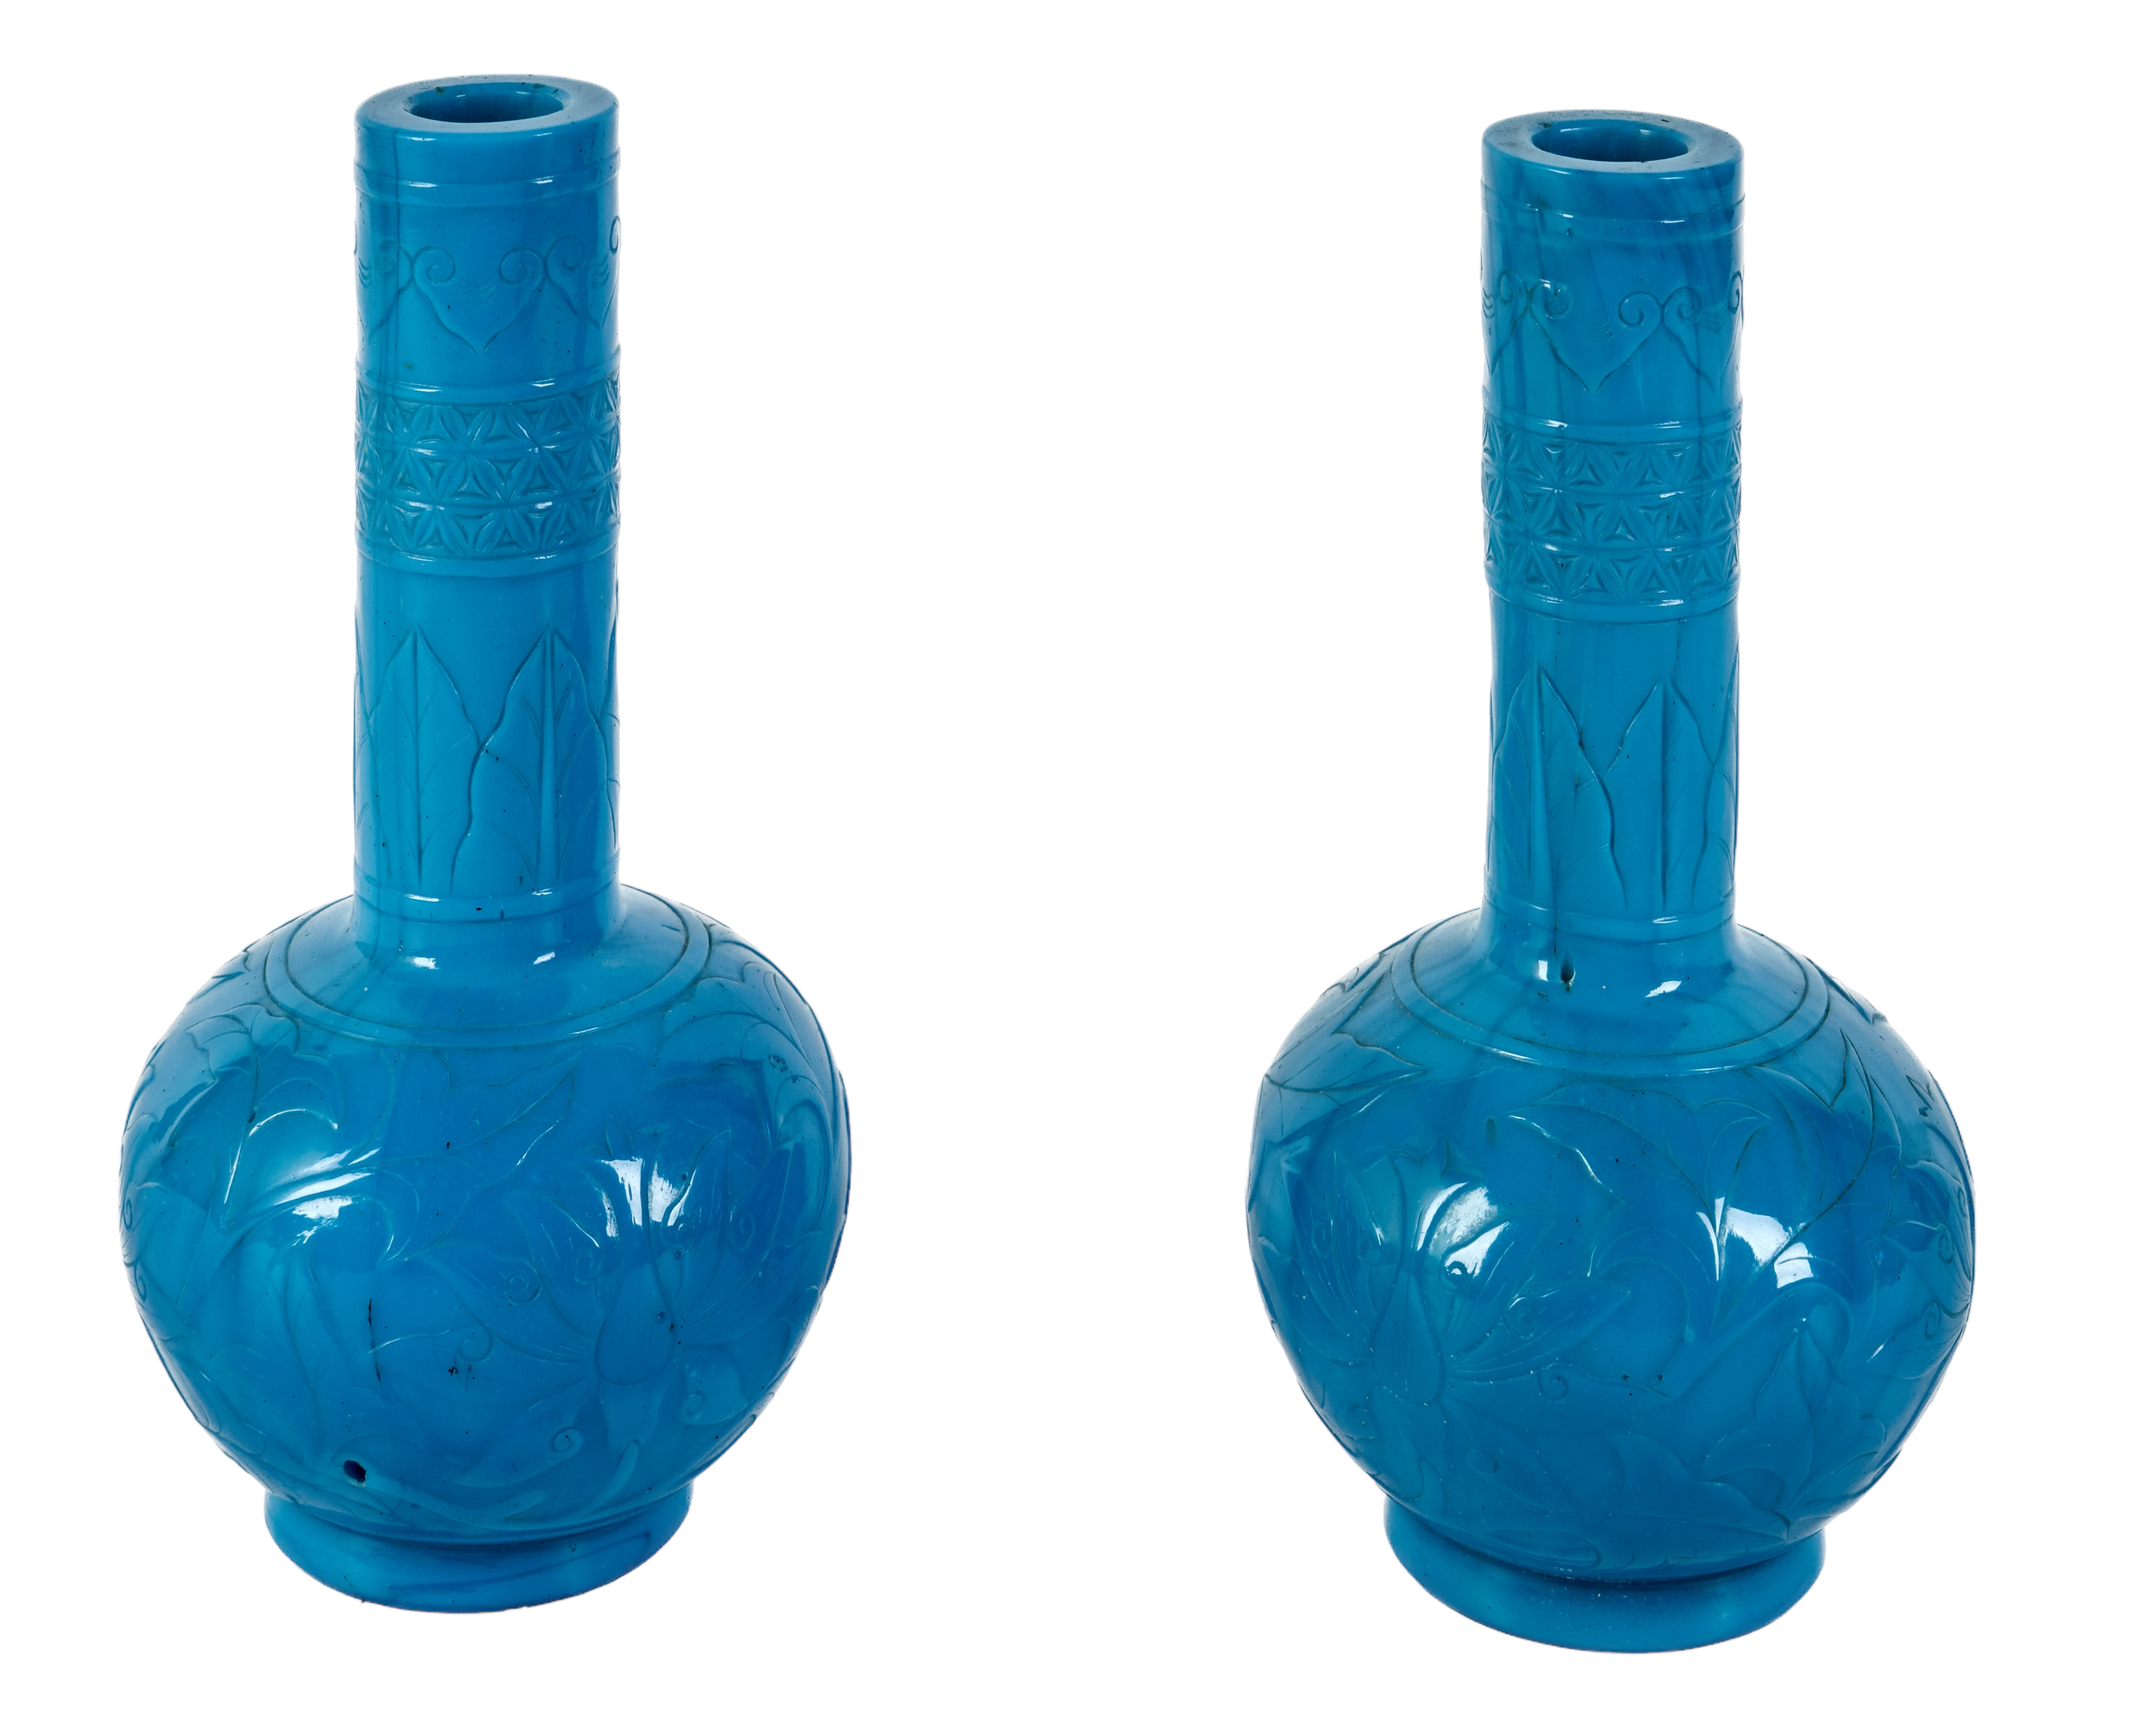 Pair of turquoise blue Peking glass